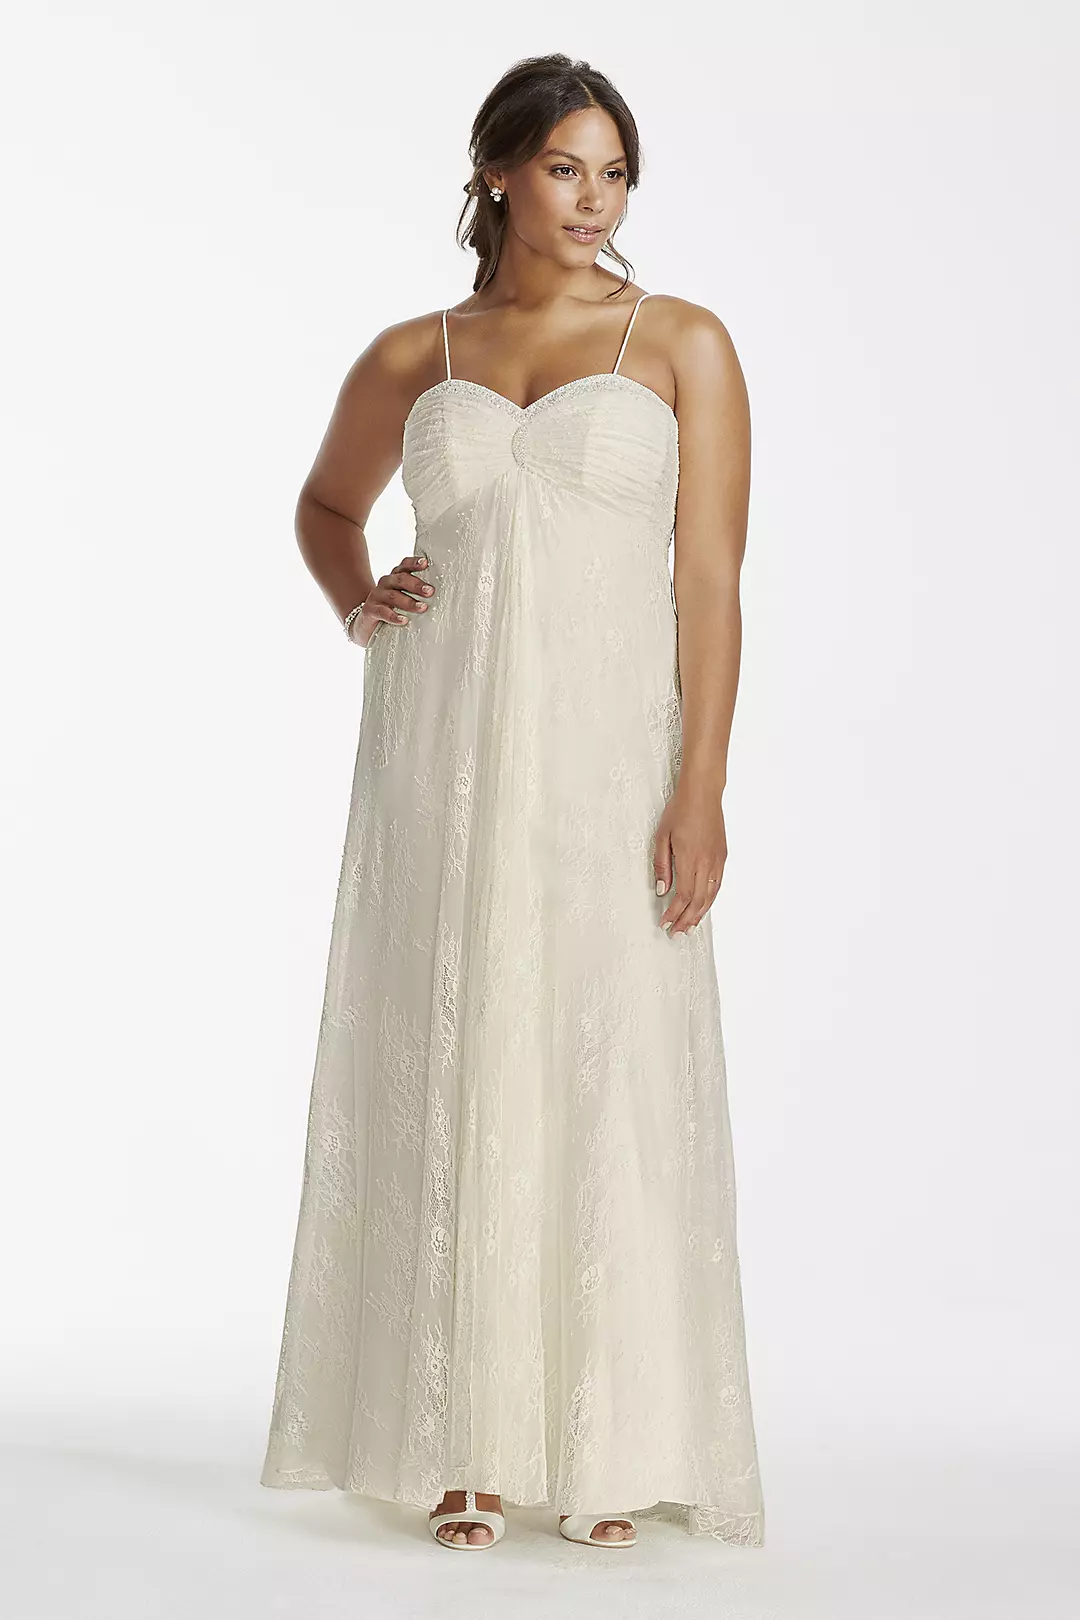 As-Is Spaghetti Strap Lace Plus Size Wedding Dress Image